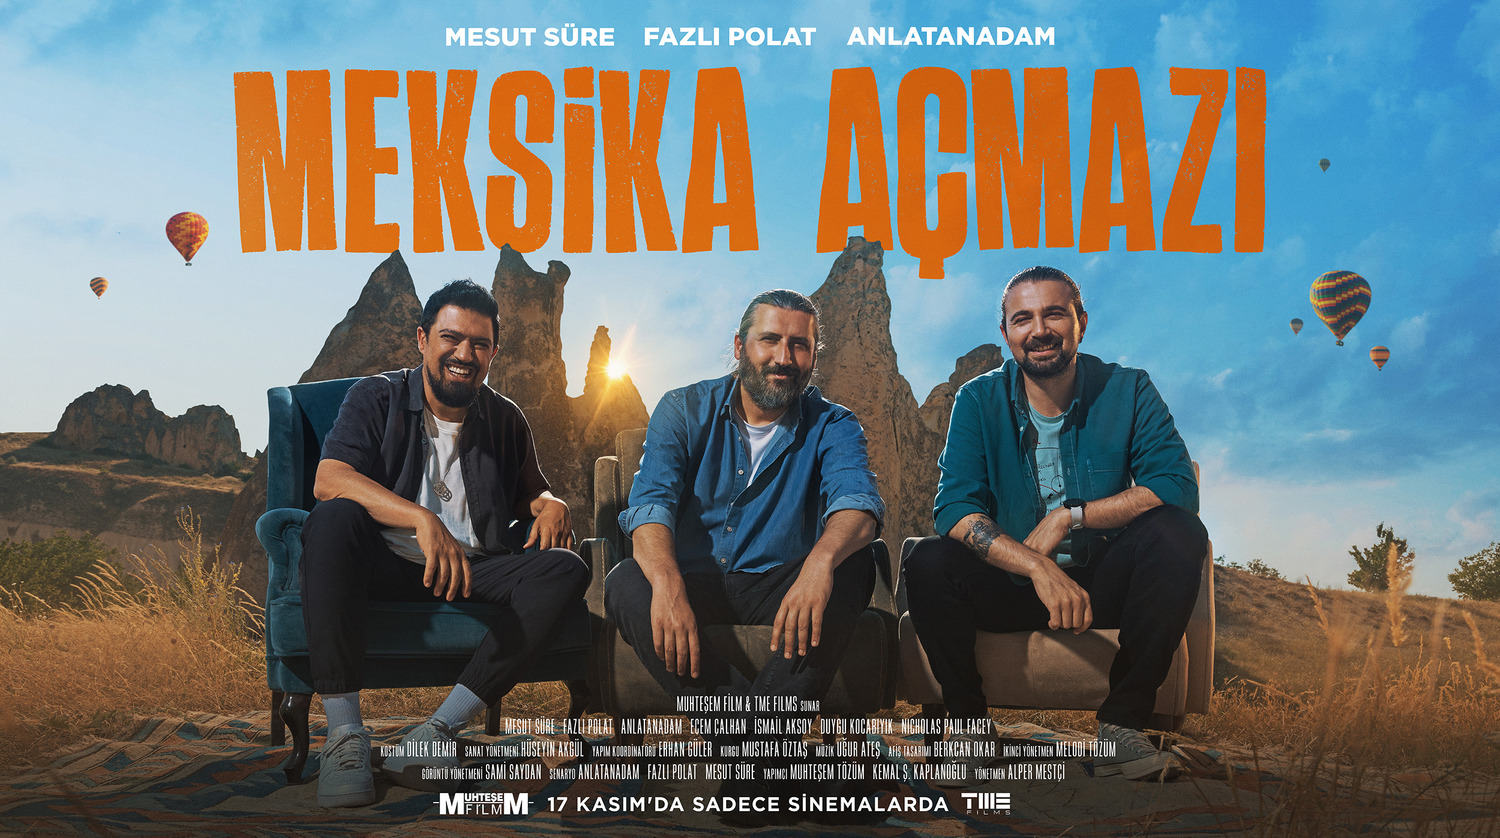 Extra Large Movie Poster Image for Meksika Açmazi (#6 of 6)